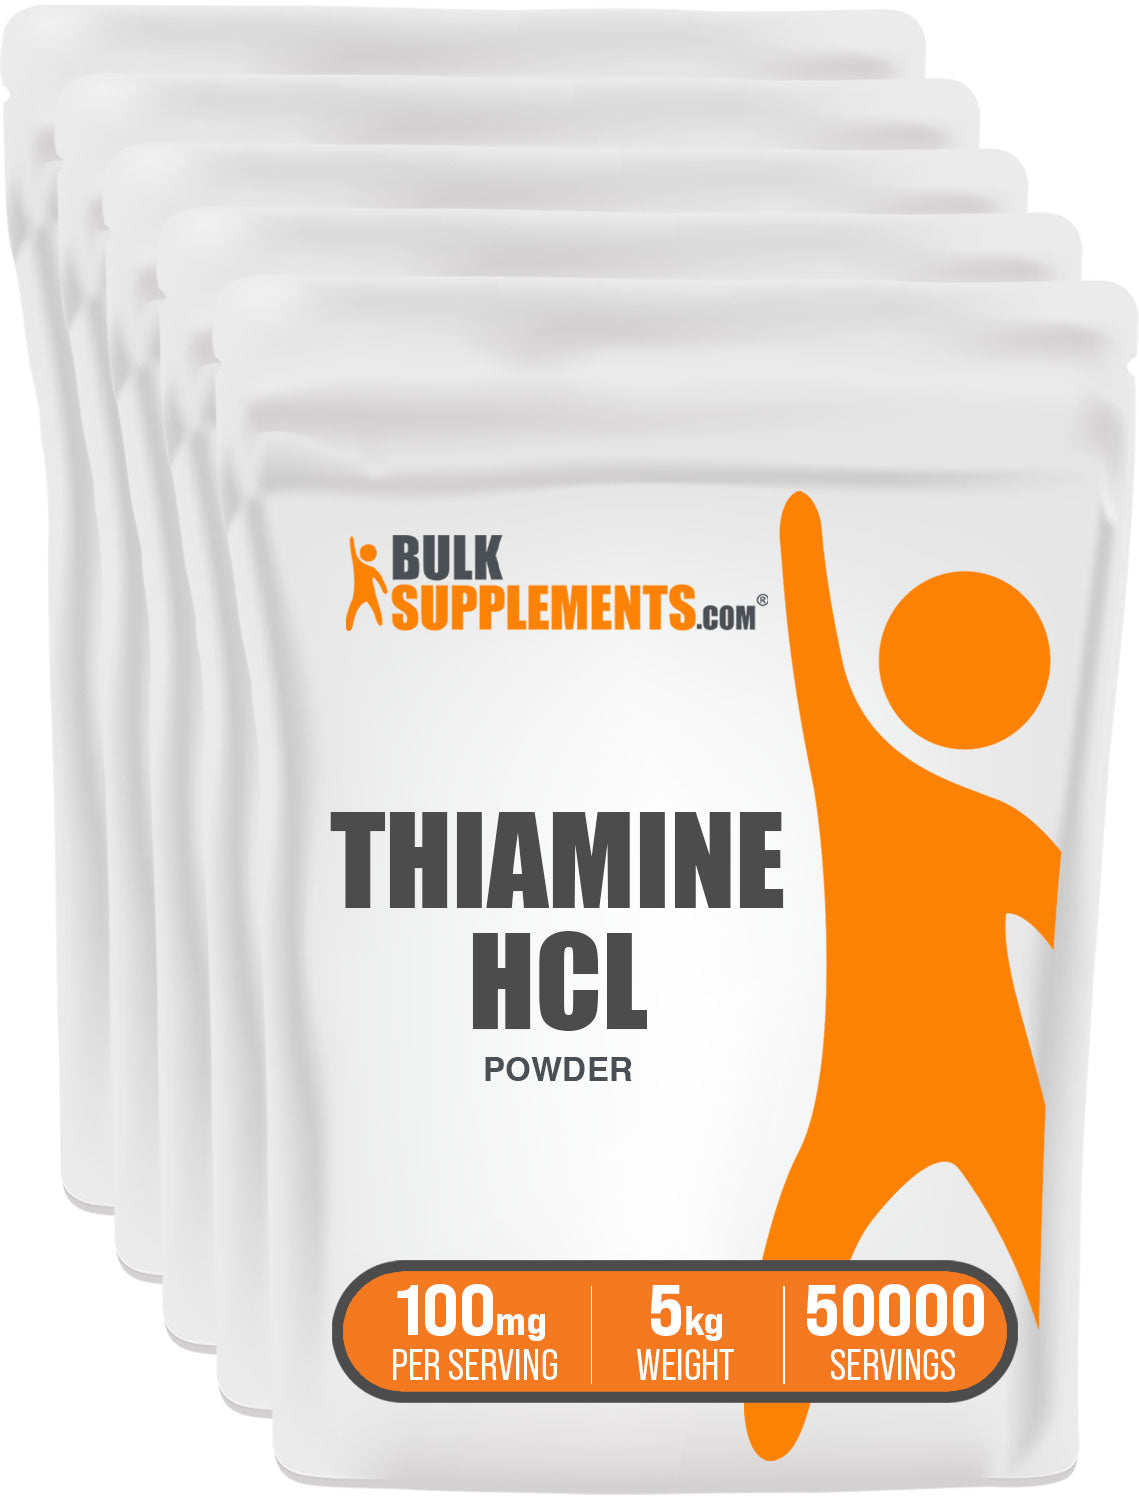 BulkSupplements Thiamine HCl Powder 5kg bag